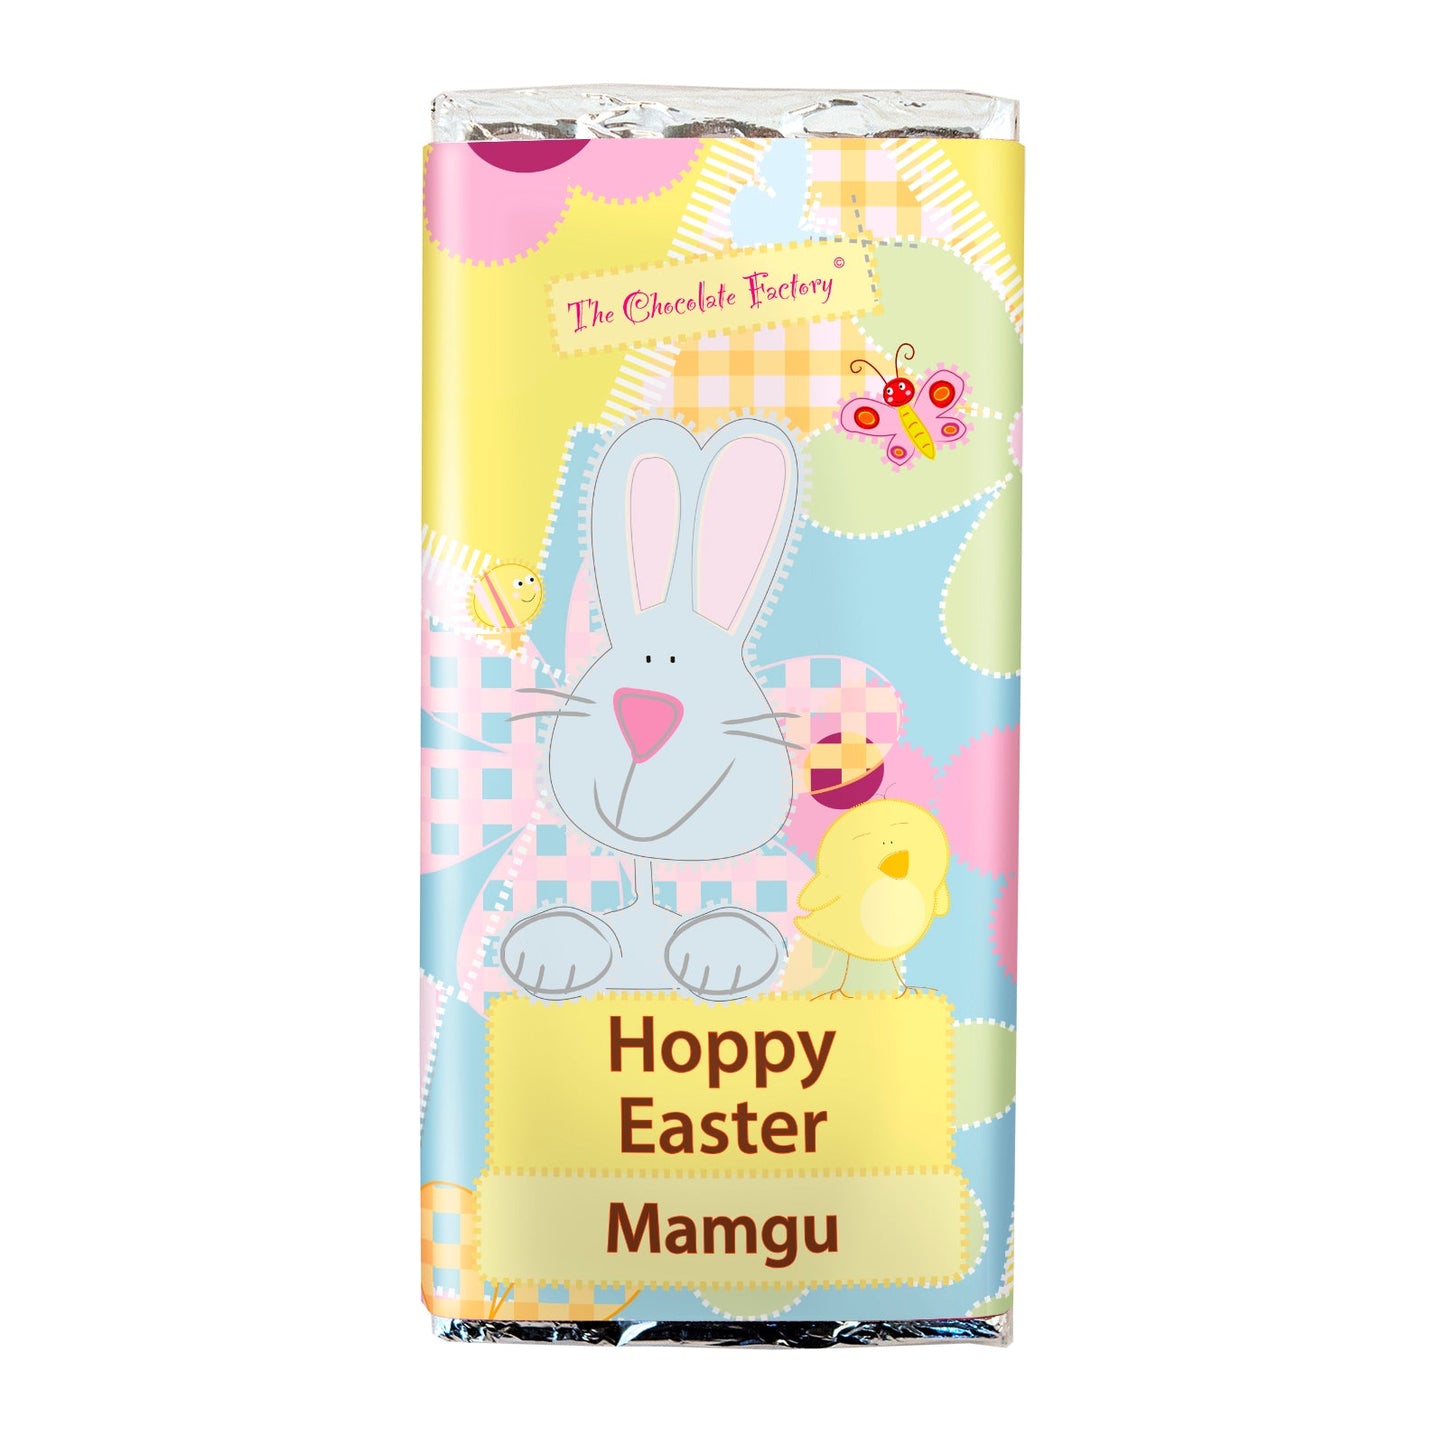 Hoppy Easter Chocolate Bar - Grandma / Gran / Mamgu / Nanna / Nan / Nanny Variations